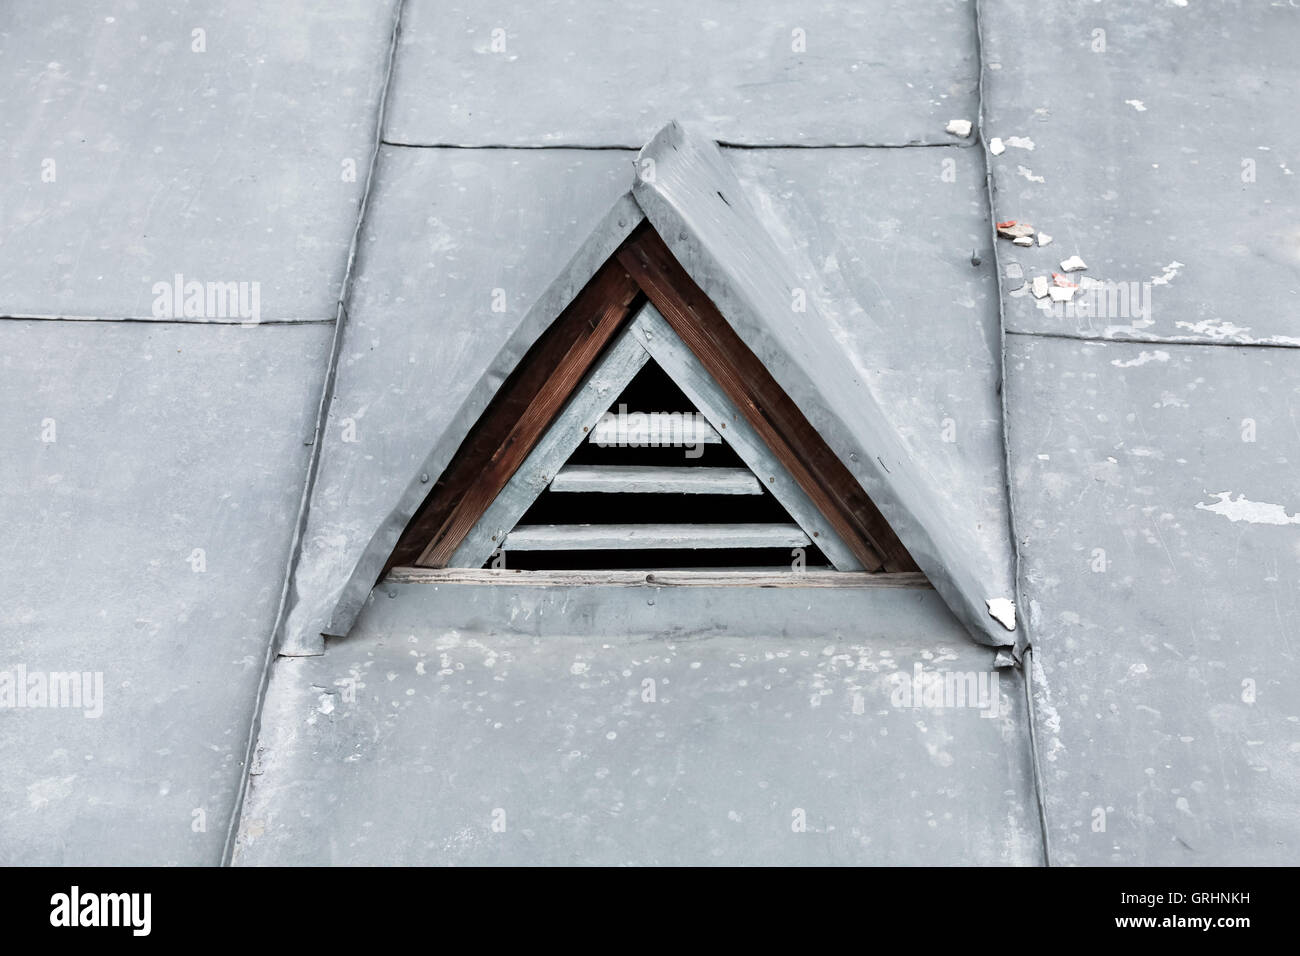 Triangle ventilation window in metal roof. Closeup photo Stock Photo